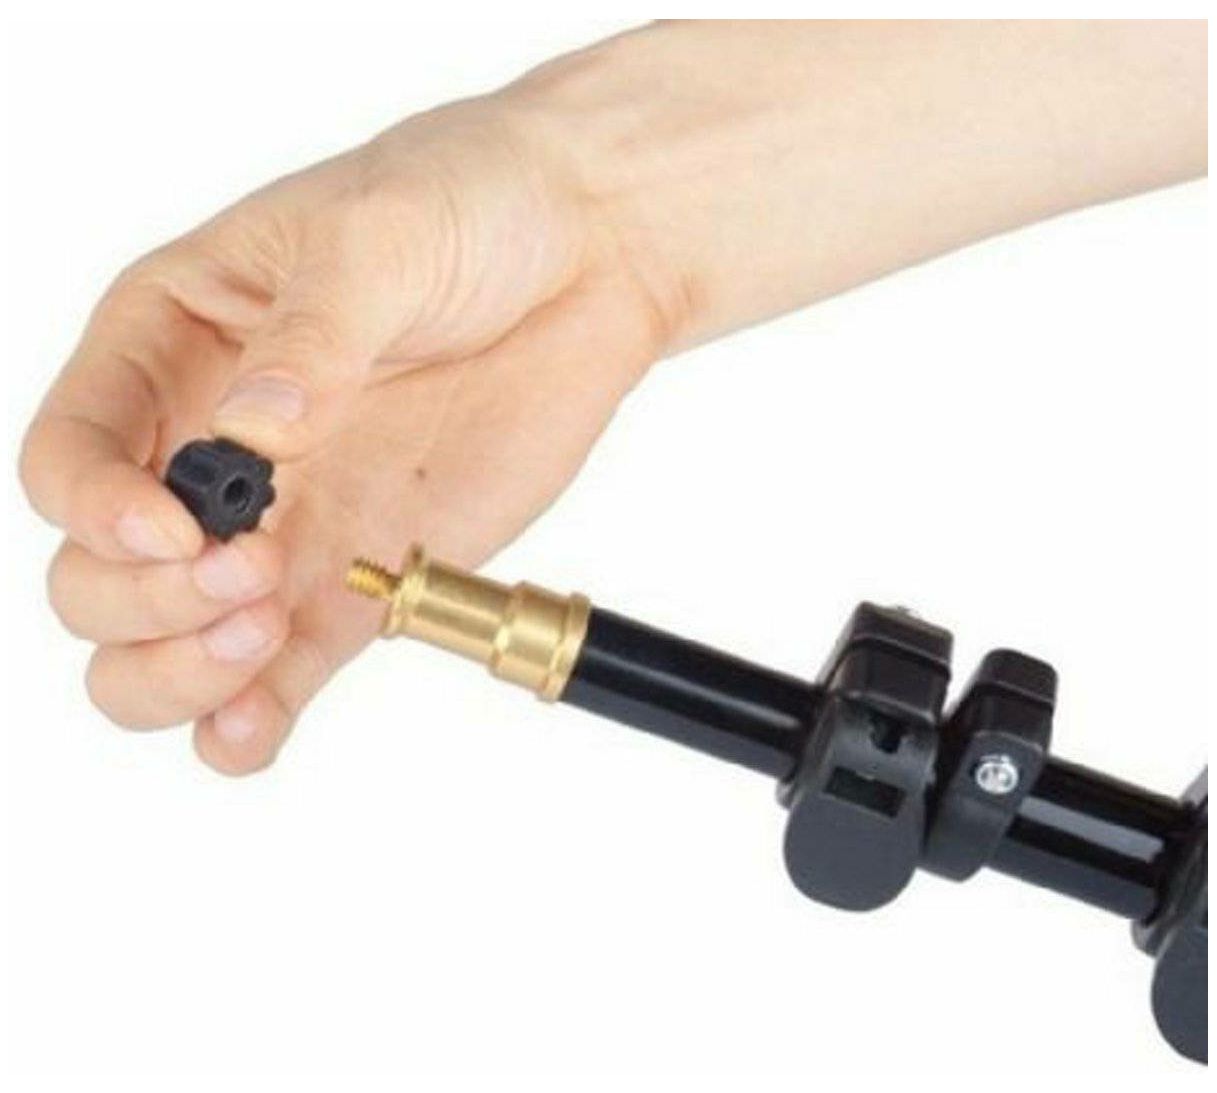 StudioKing Boompole Stick LBPS-158 Telescopic Retractable Extension Arm with Handle 63-158cm teleskopski štap za bljeskalice, mikrofone i rasvjetu